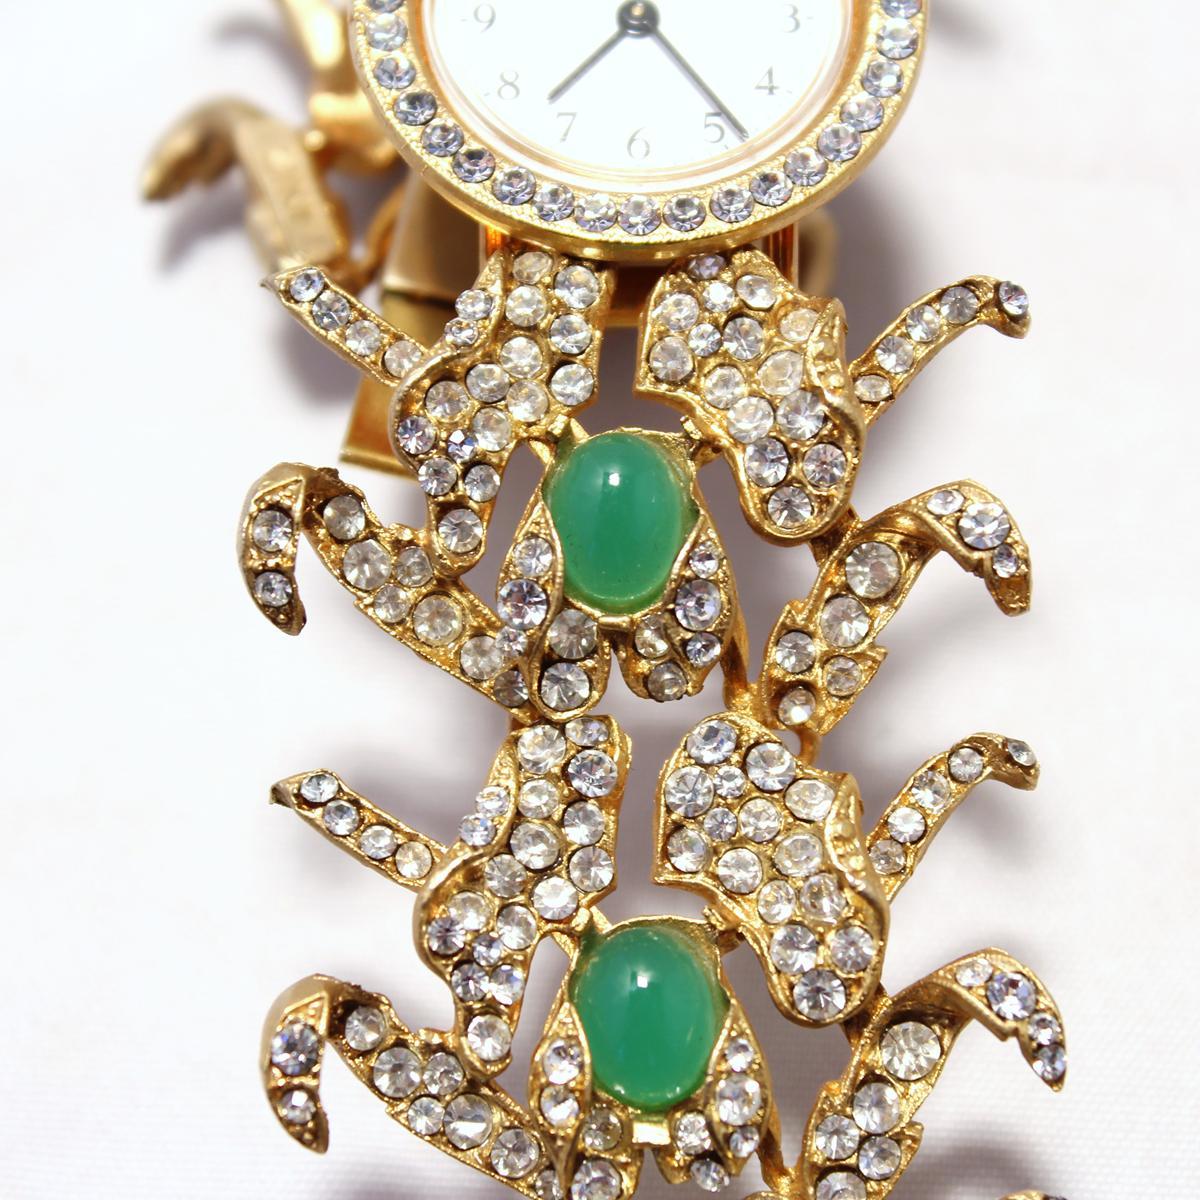 Carlo Zini Vintage Jewel Watch In New Condition For Sale In Gazzaniga (BG), IT